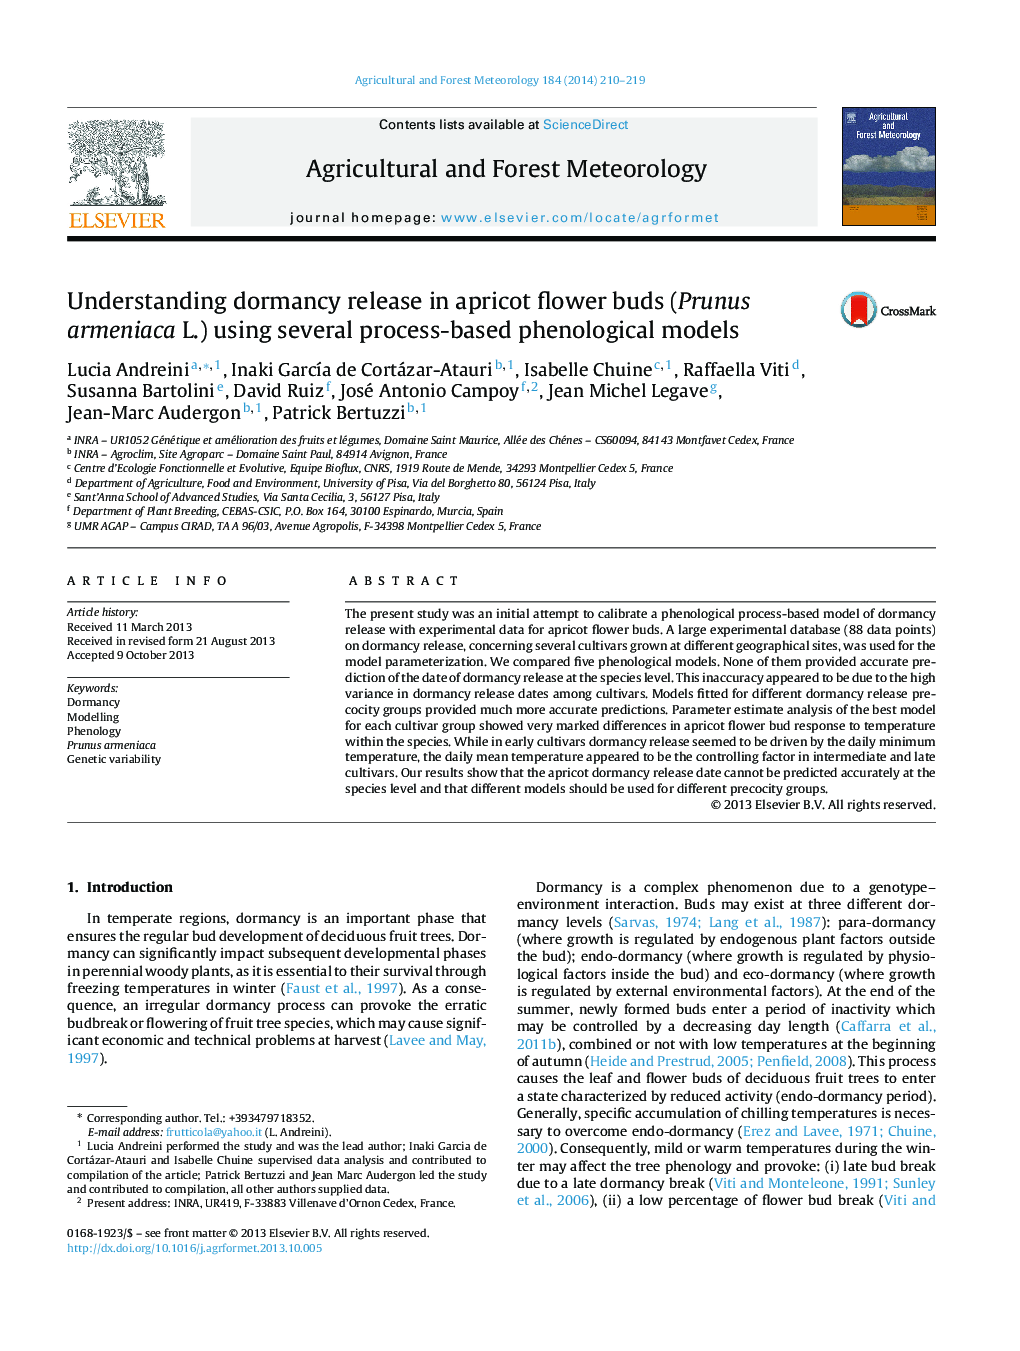 Understanding dormancy release in apricot flower buds (Prunus armeniaca L.) using several process-based phenological models